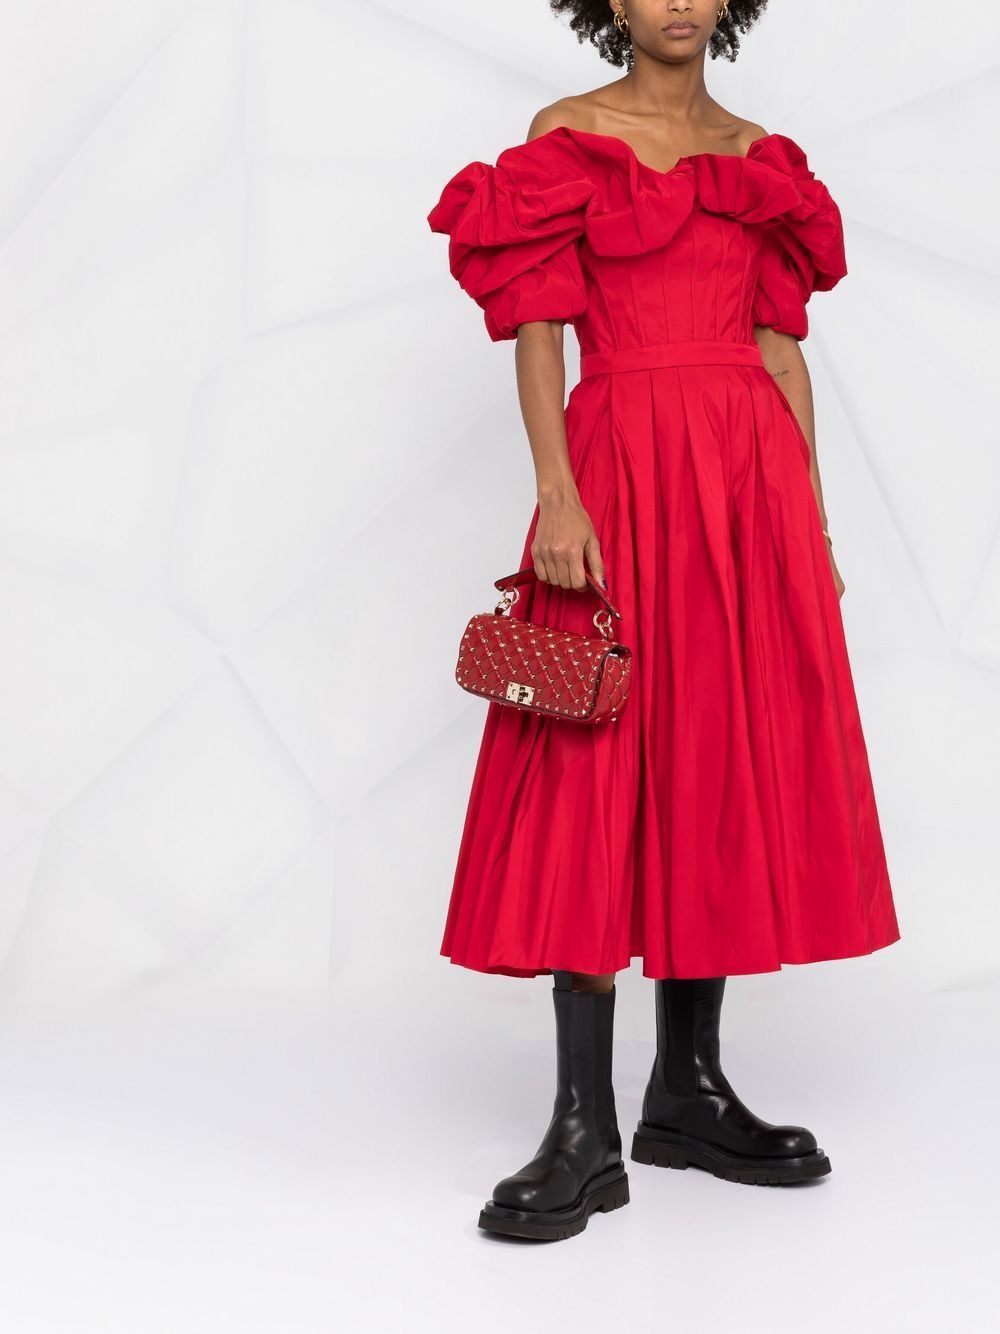 VALENTINO GARAVANI Stylish Red Leather Shoulder Handbag for Women